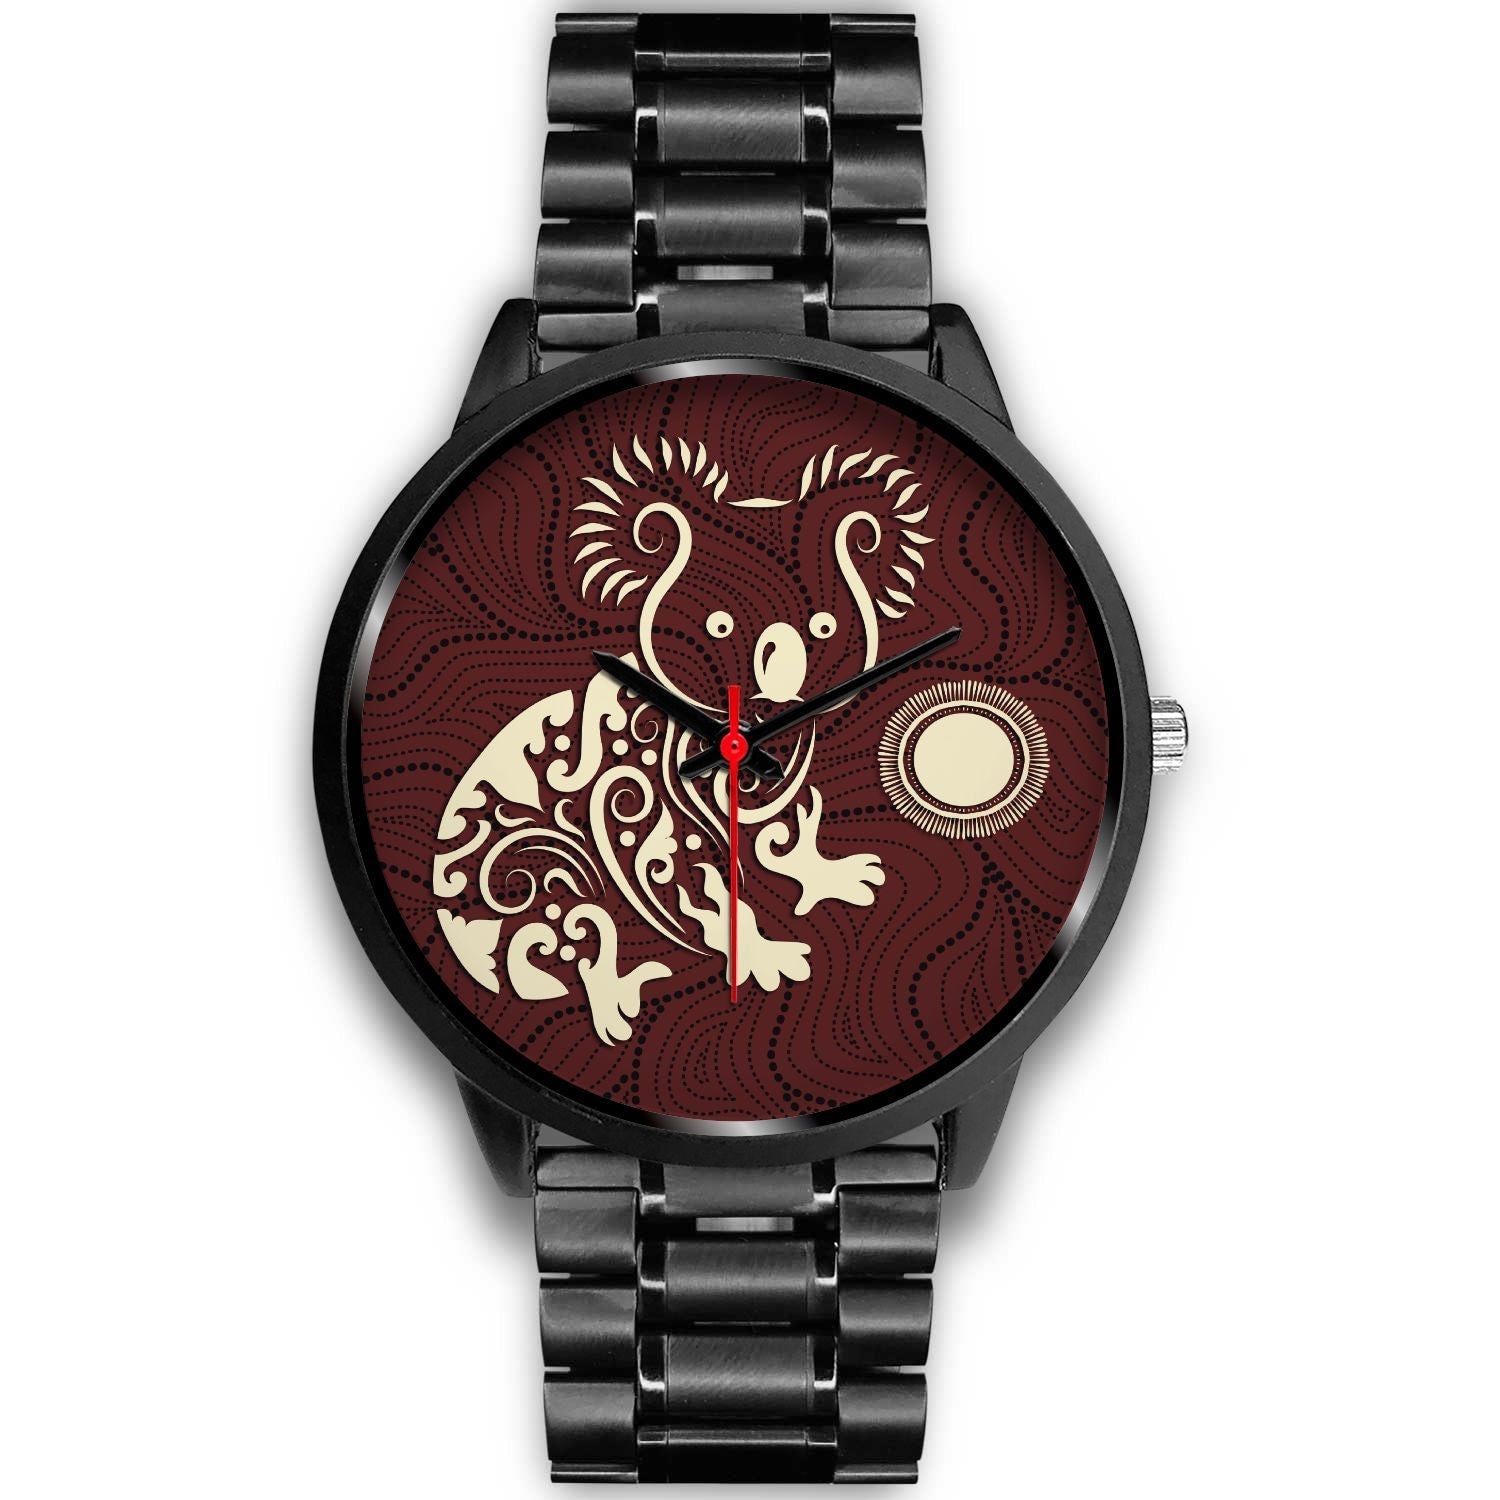 australia-aboriginal-watch-koala-patterns-treasure-black-watch